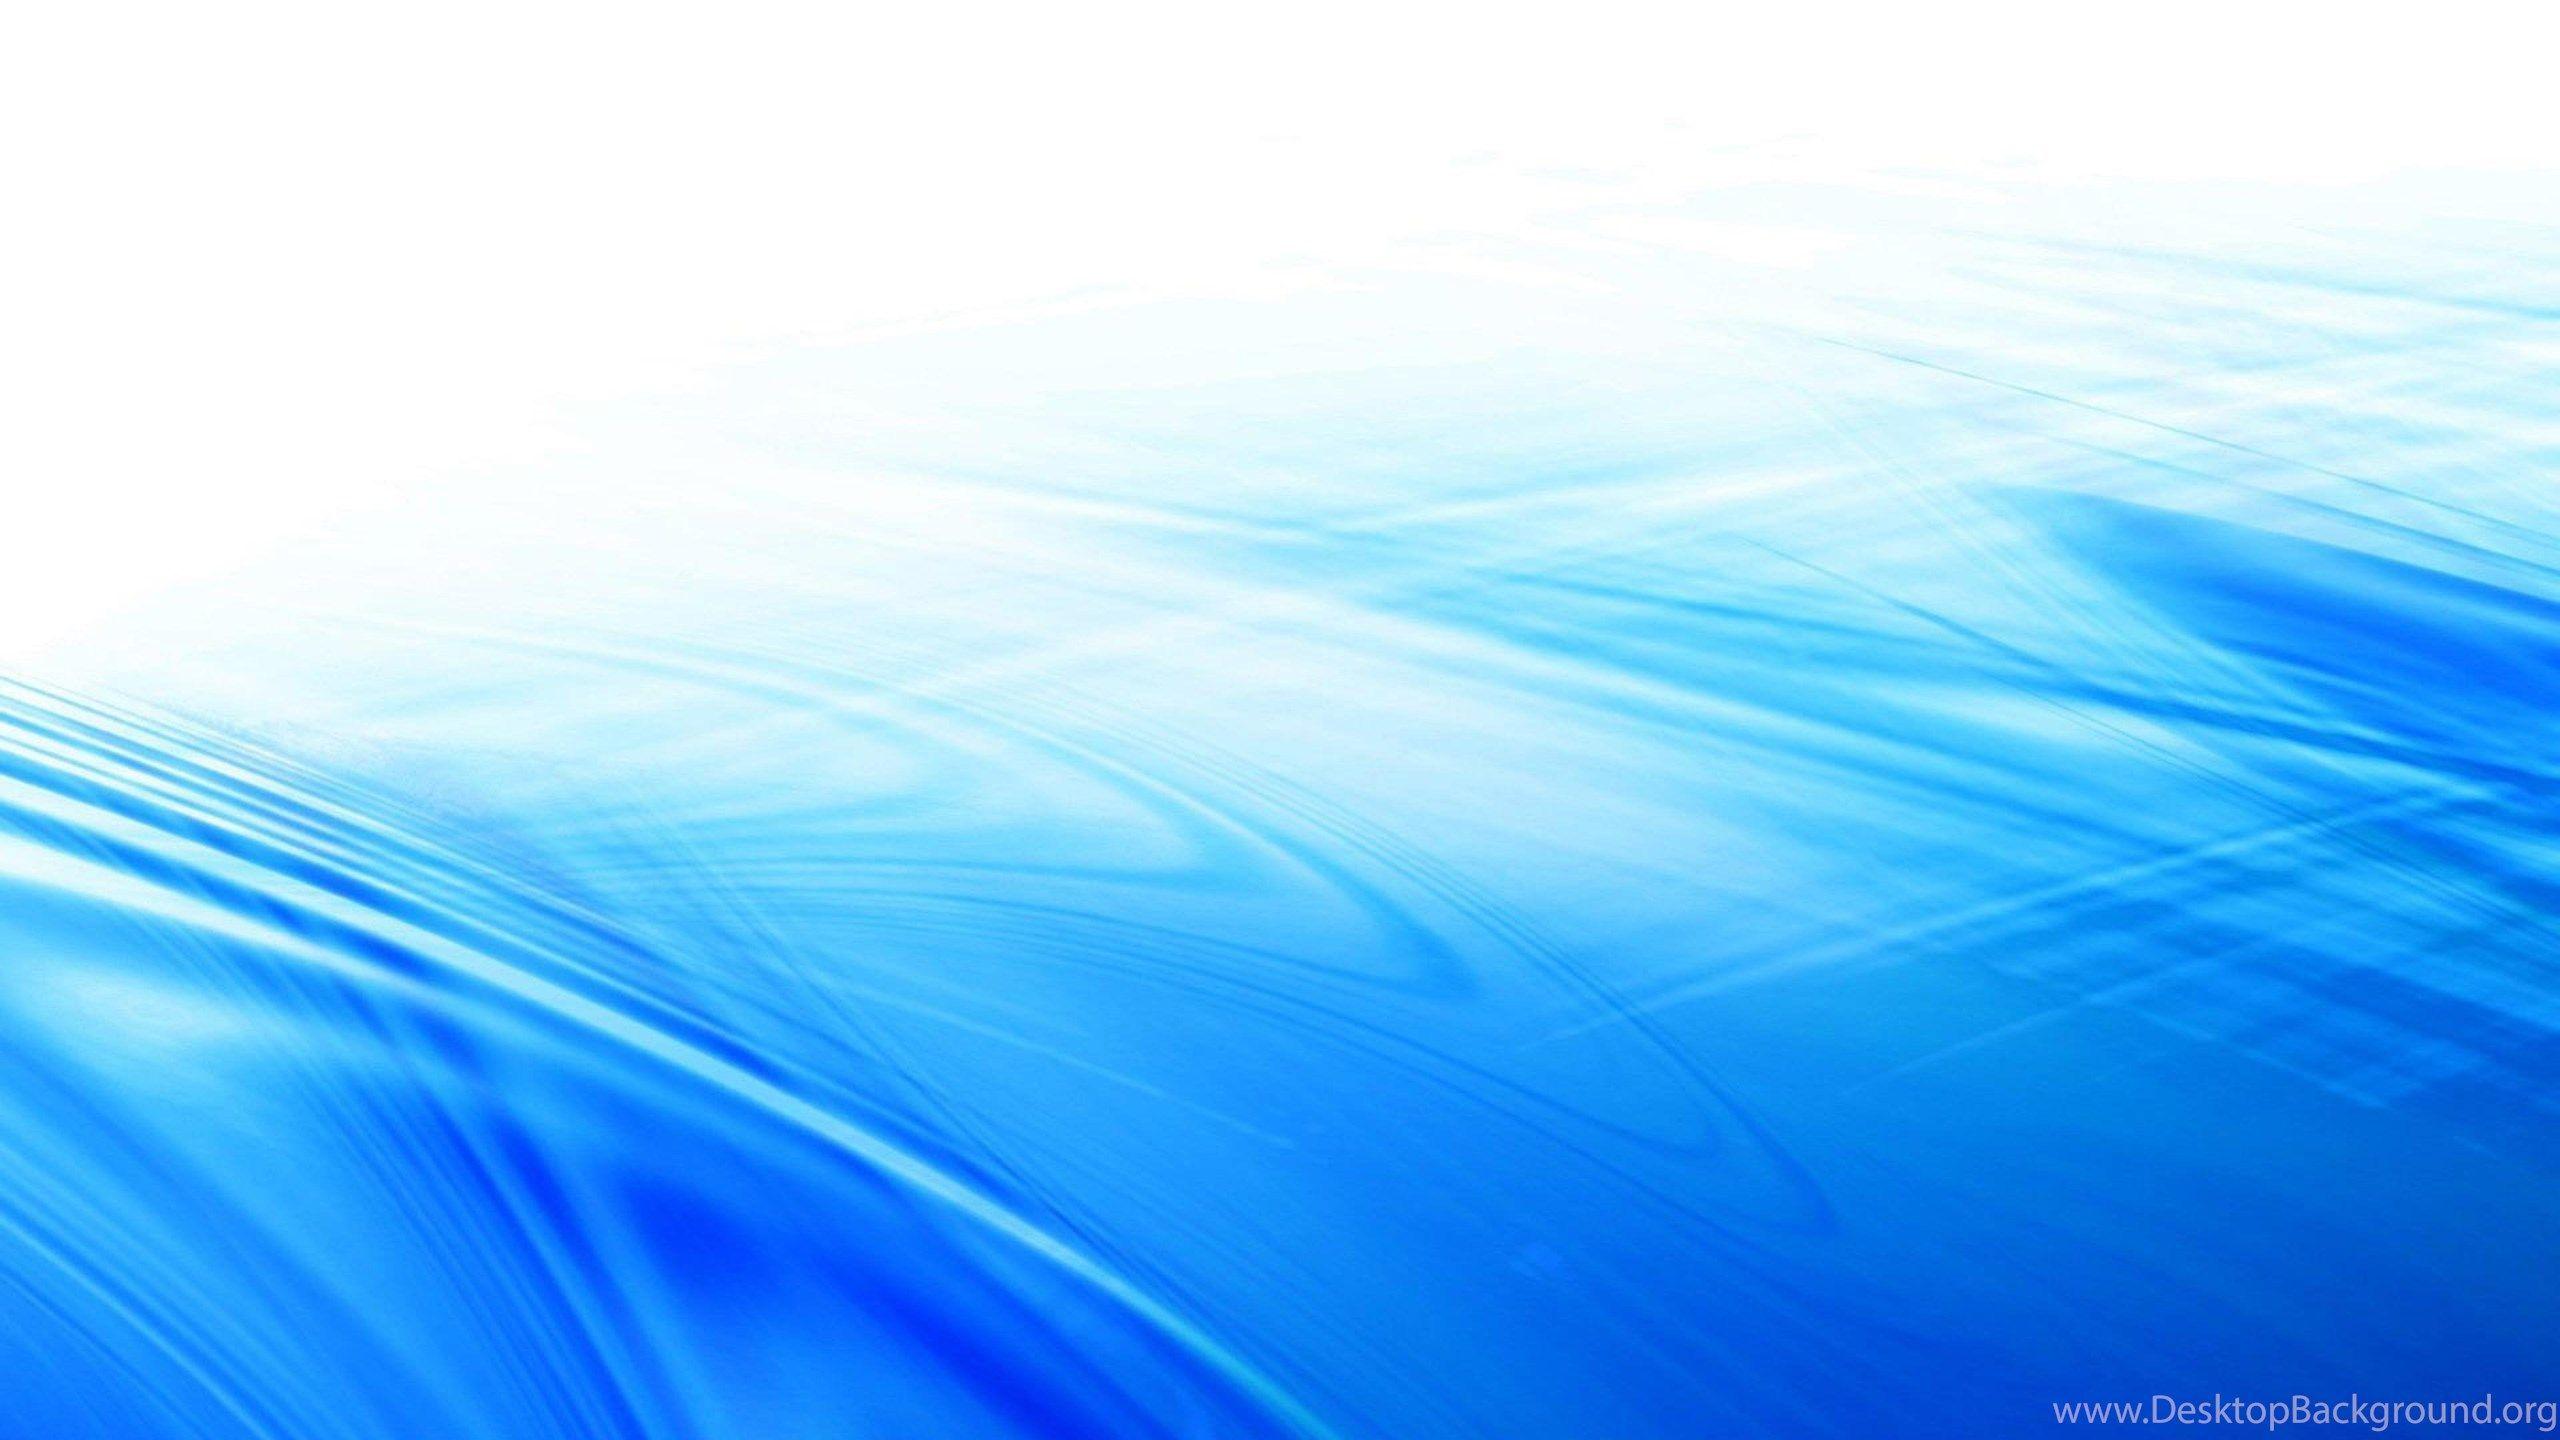 Blue Waves Abstract Wave HD Wallpaper, Desktop Background